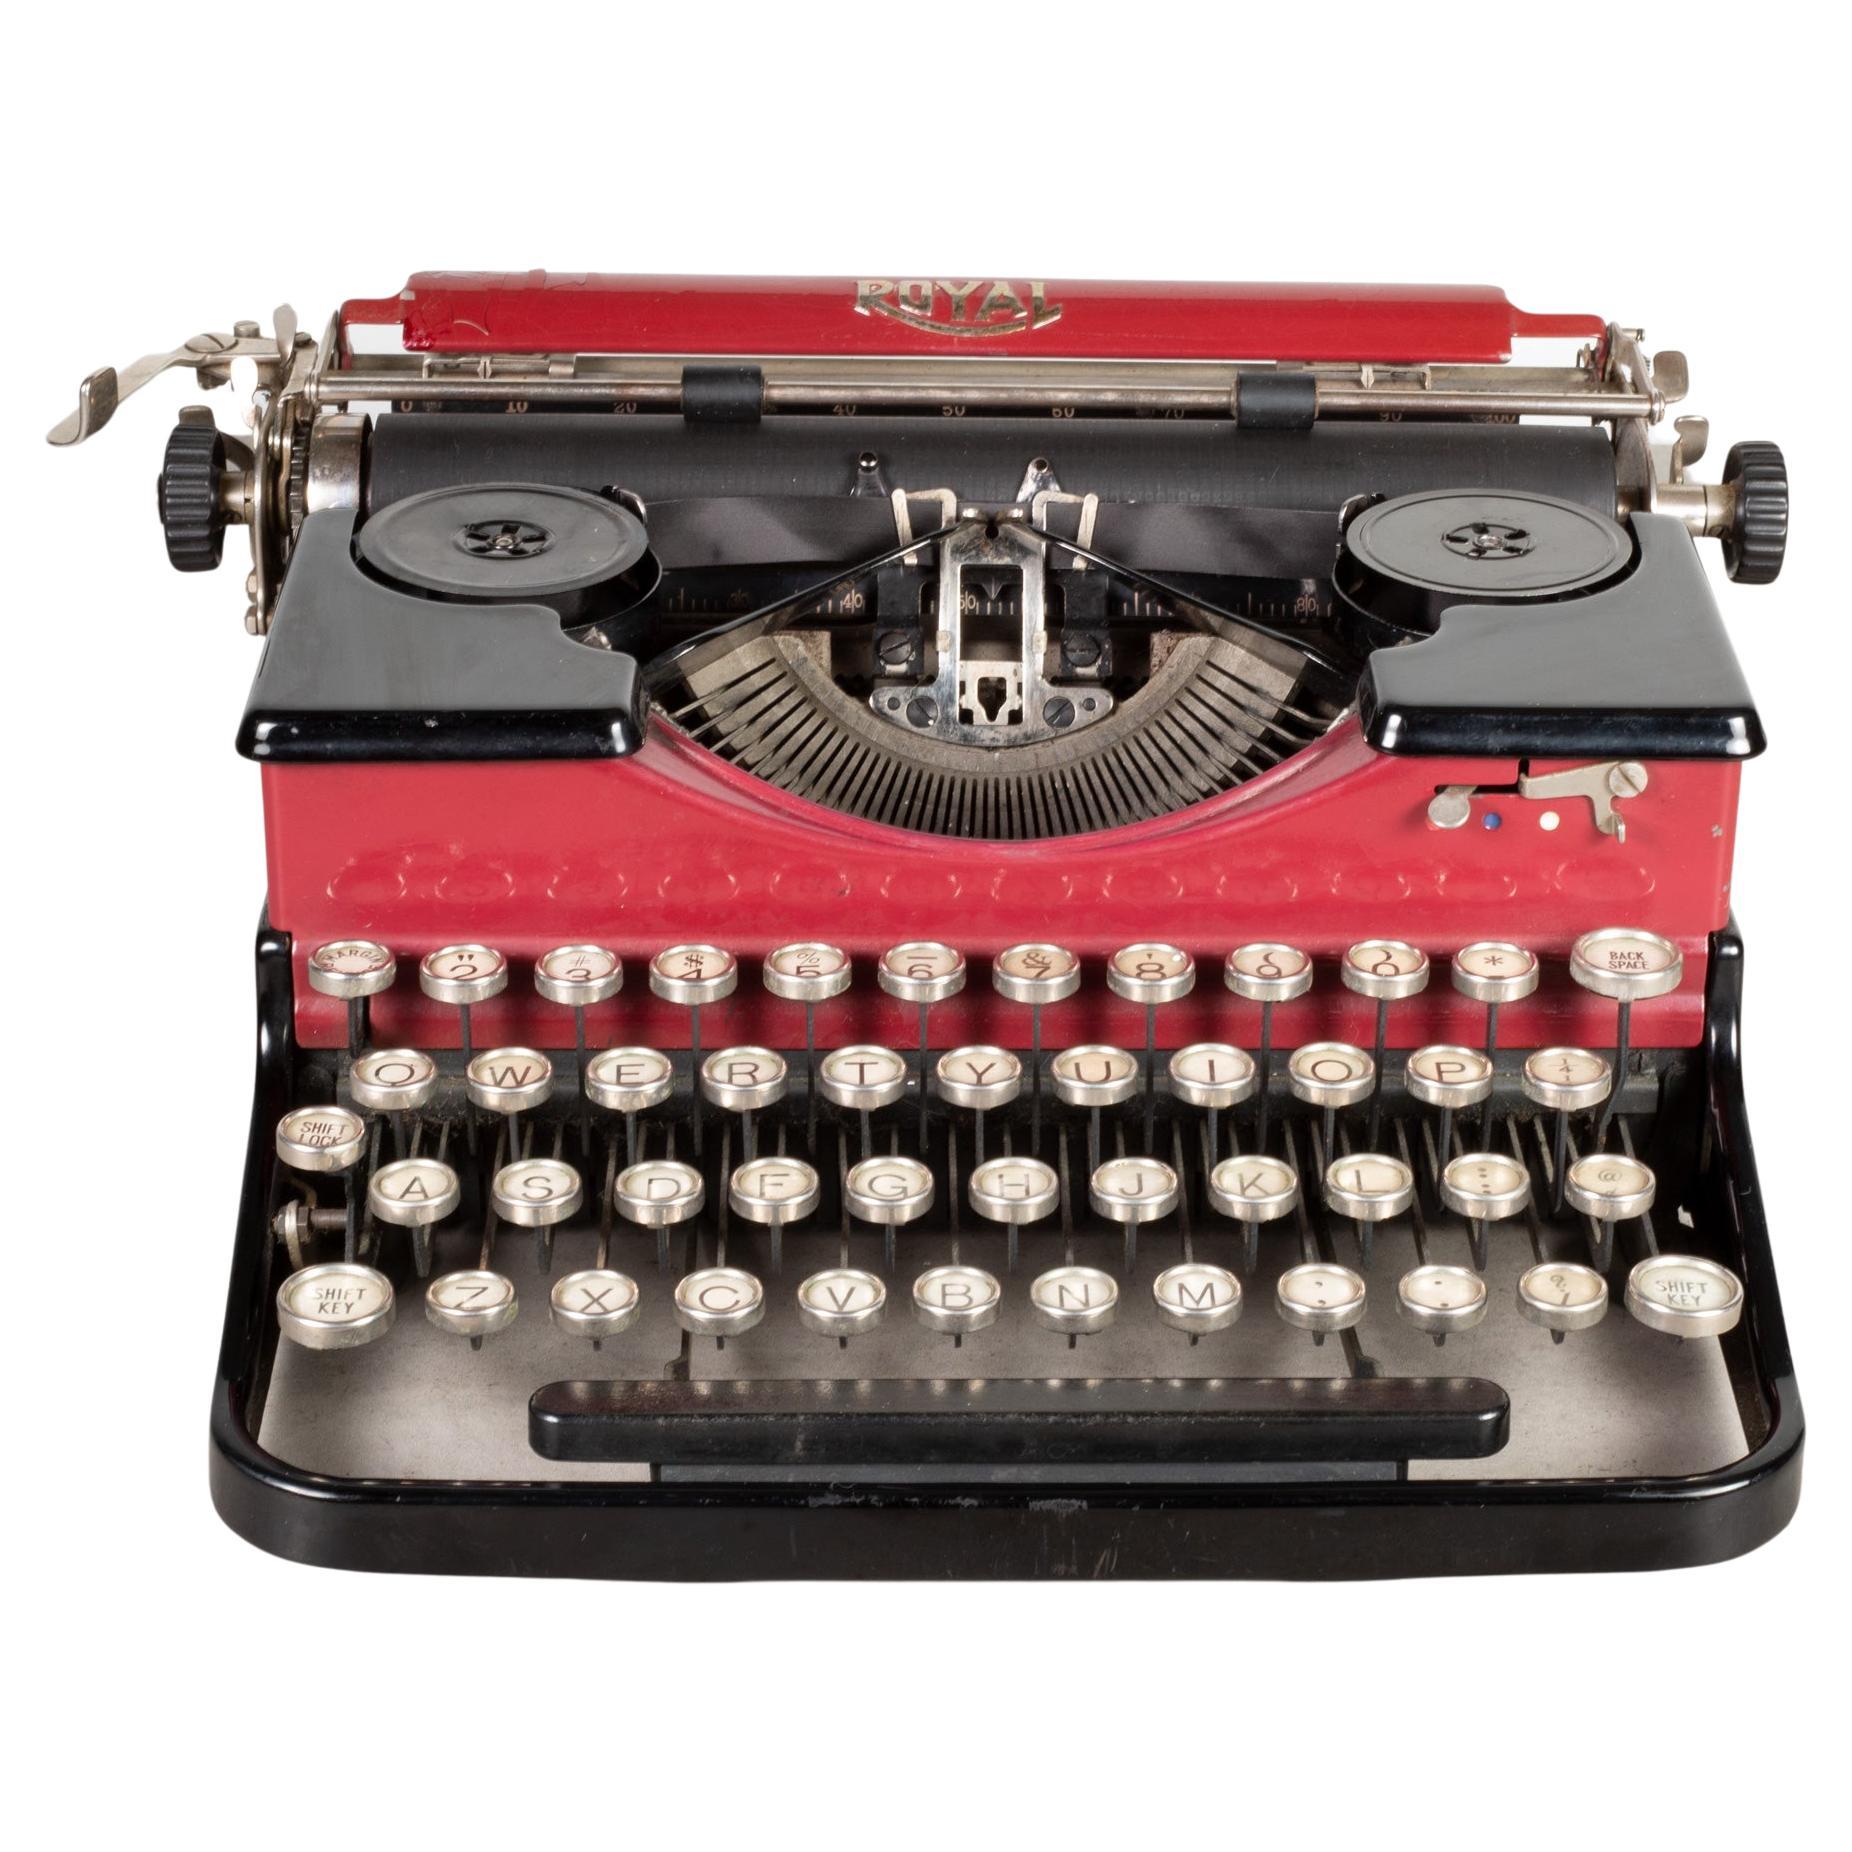 Rare Two Tone Royal "P" Portable Typewriter, c.1928 For Sale